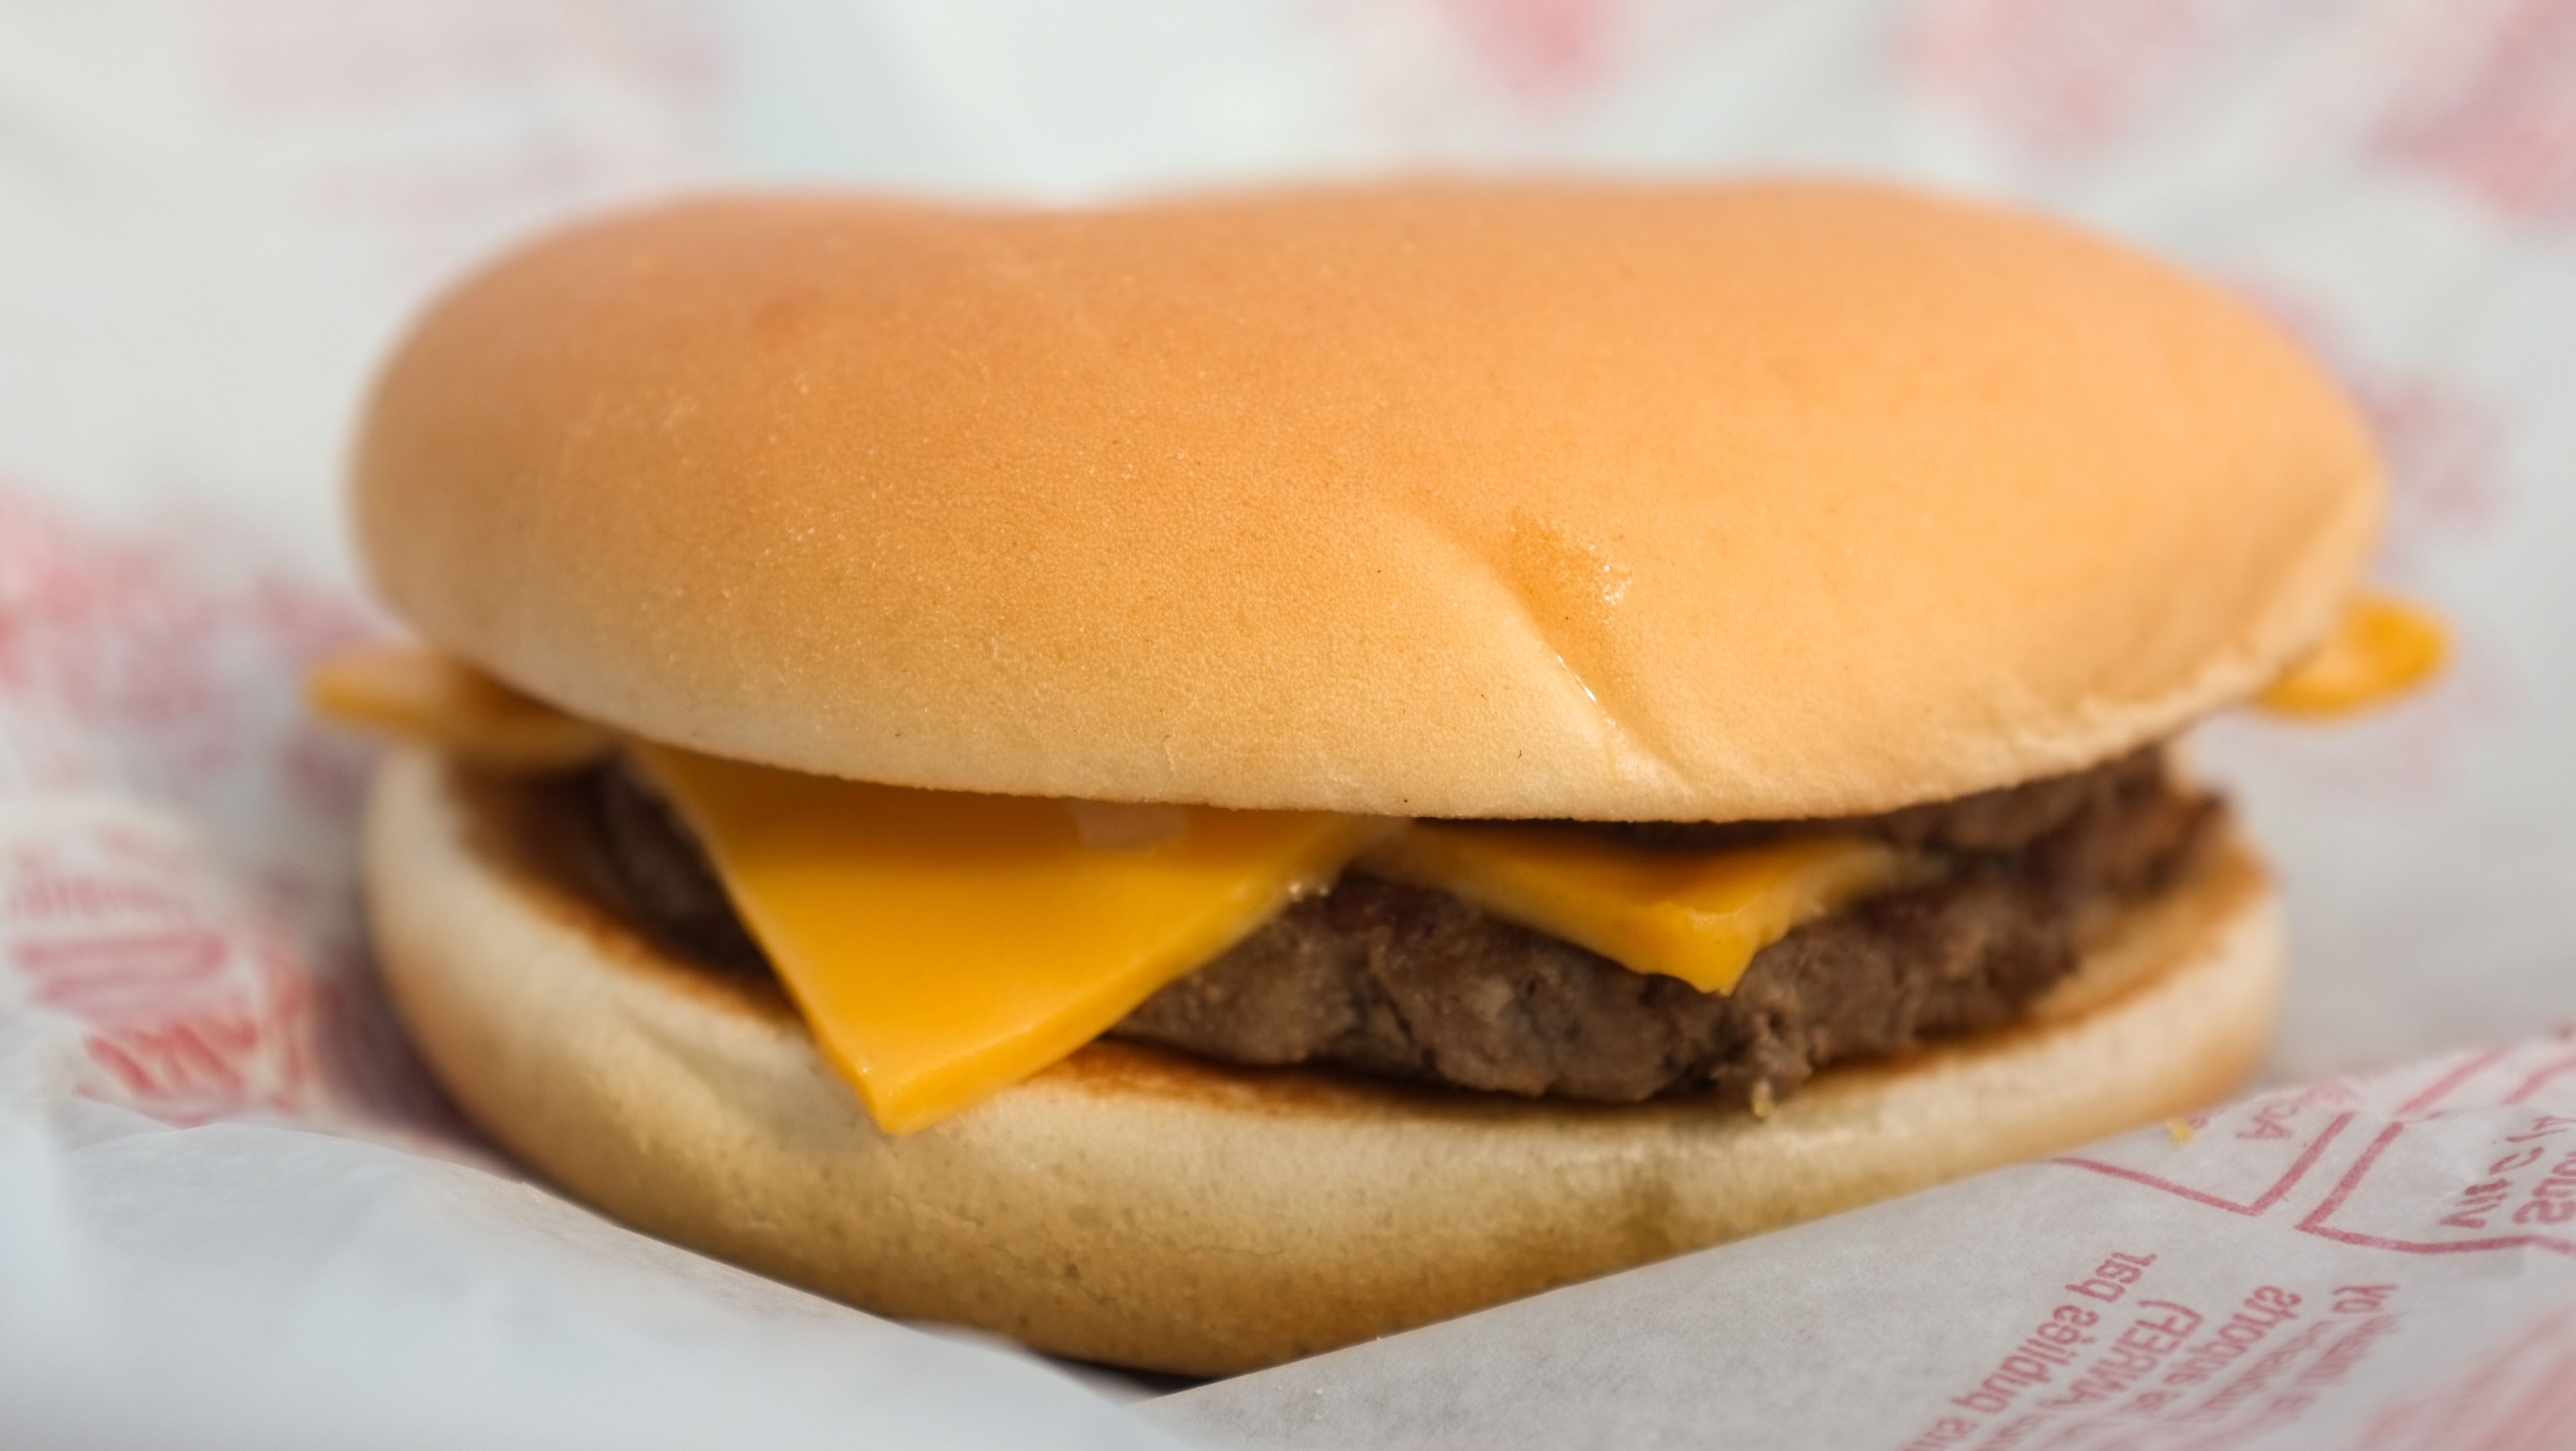 A cheeseburger.